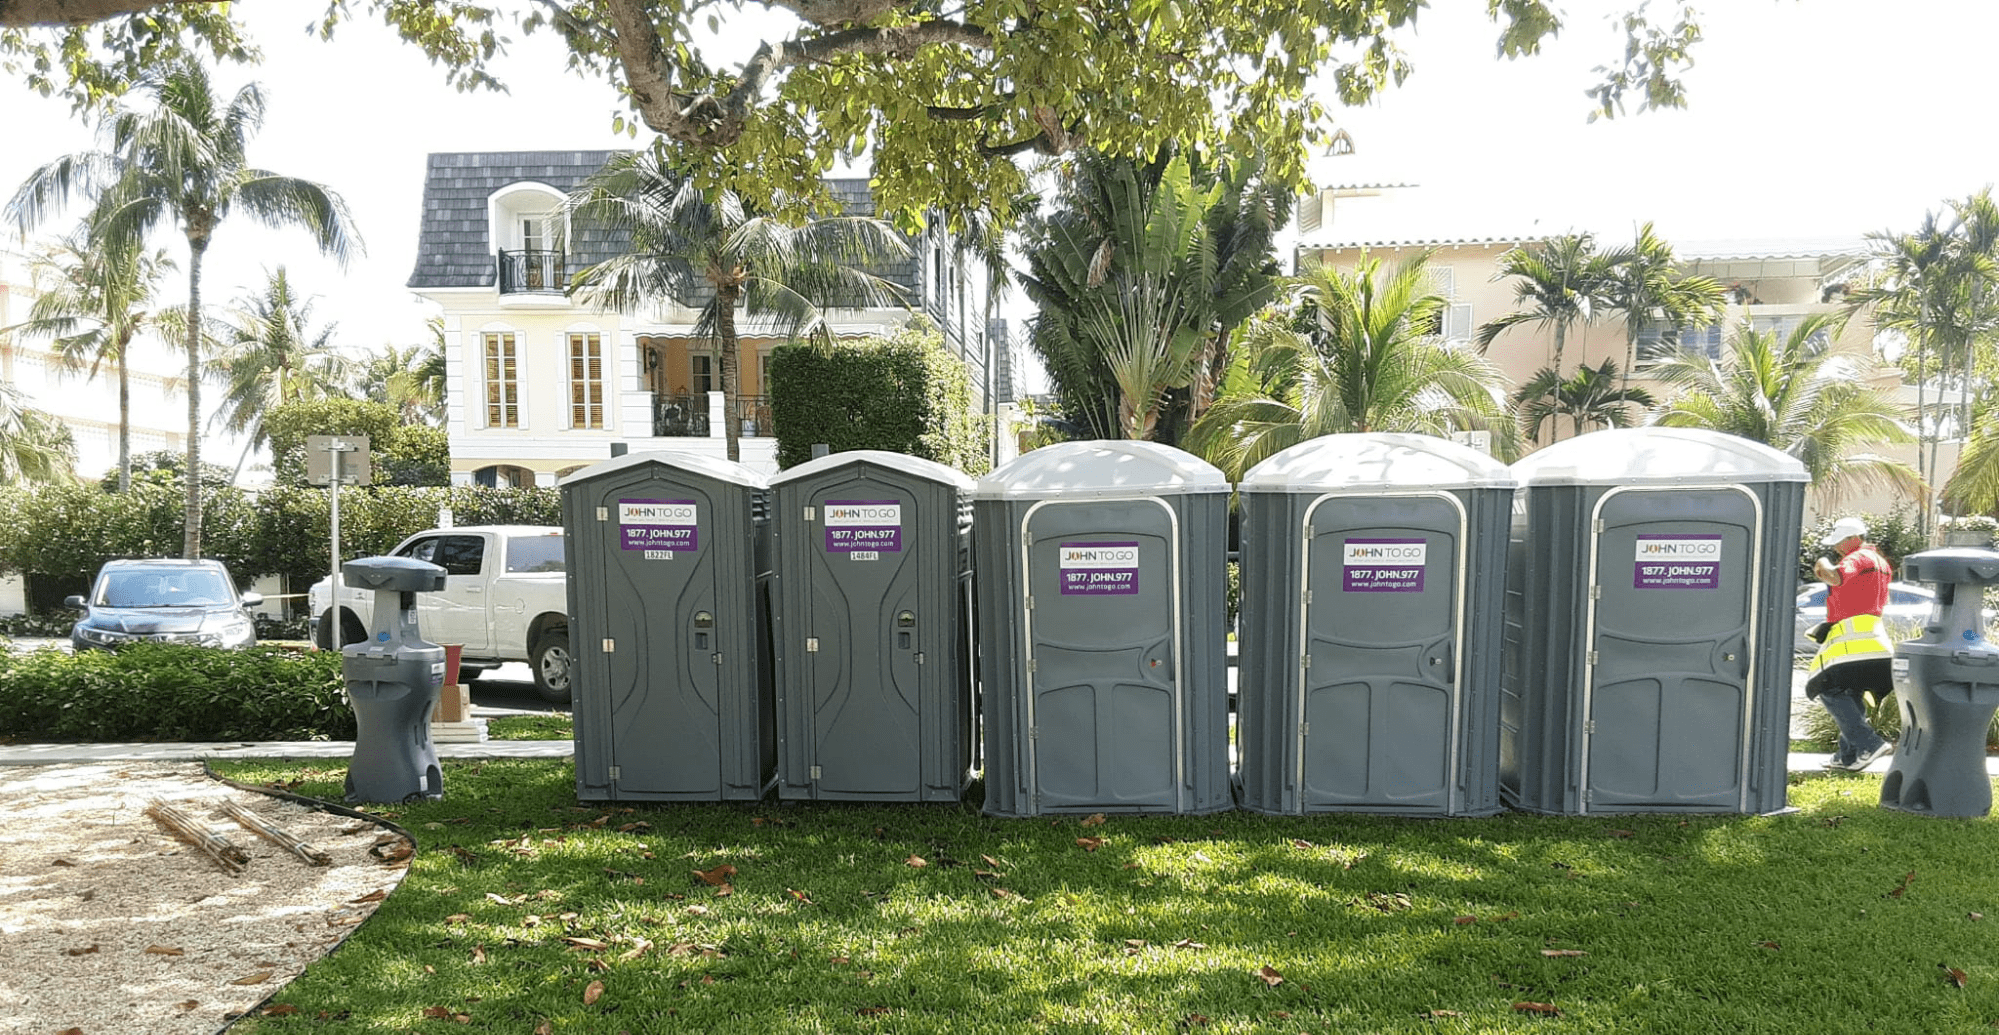 ADA-compliant farm restrooms with regular porta potties